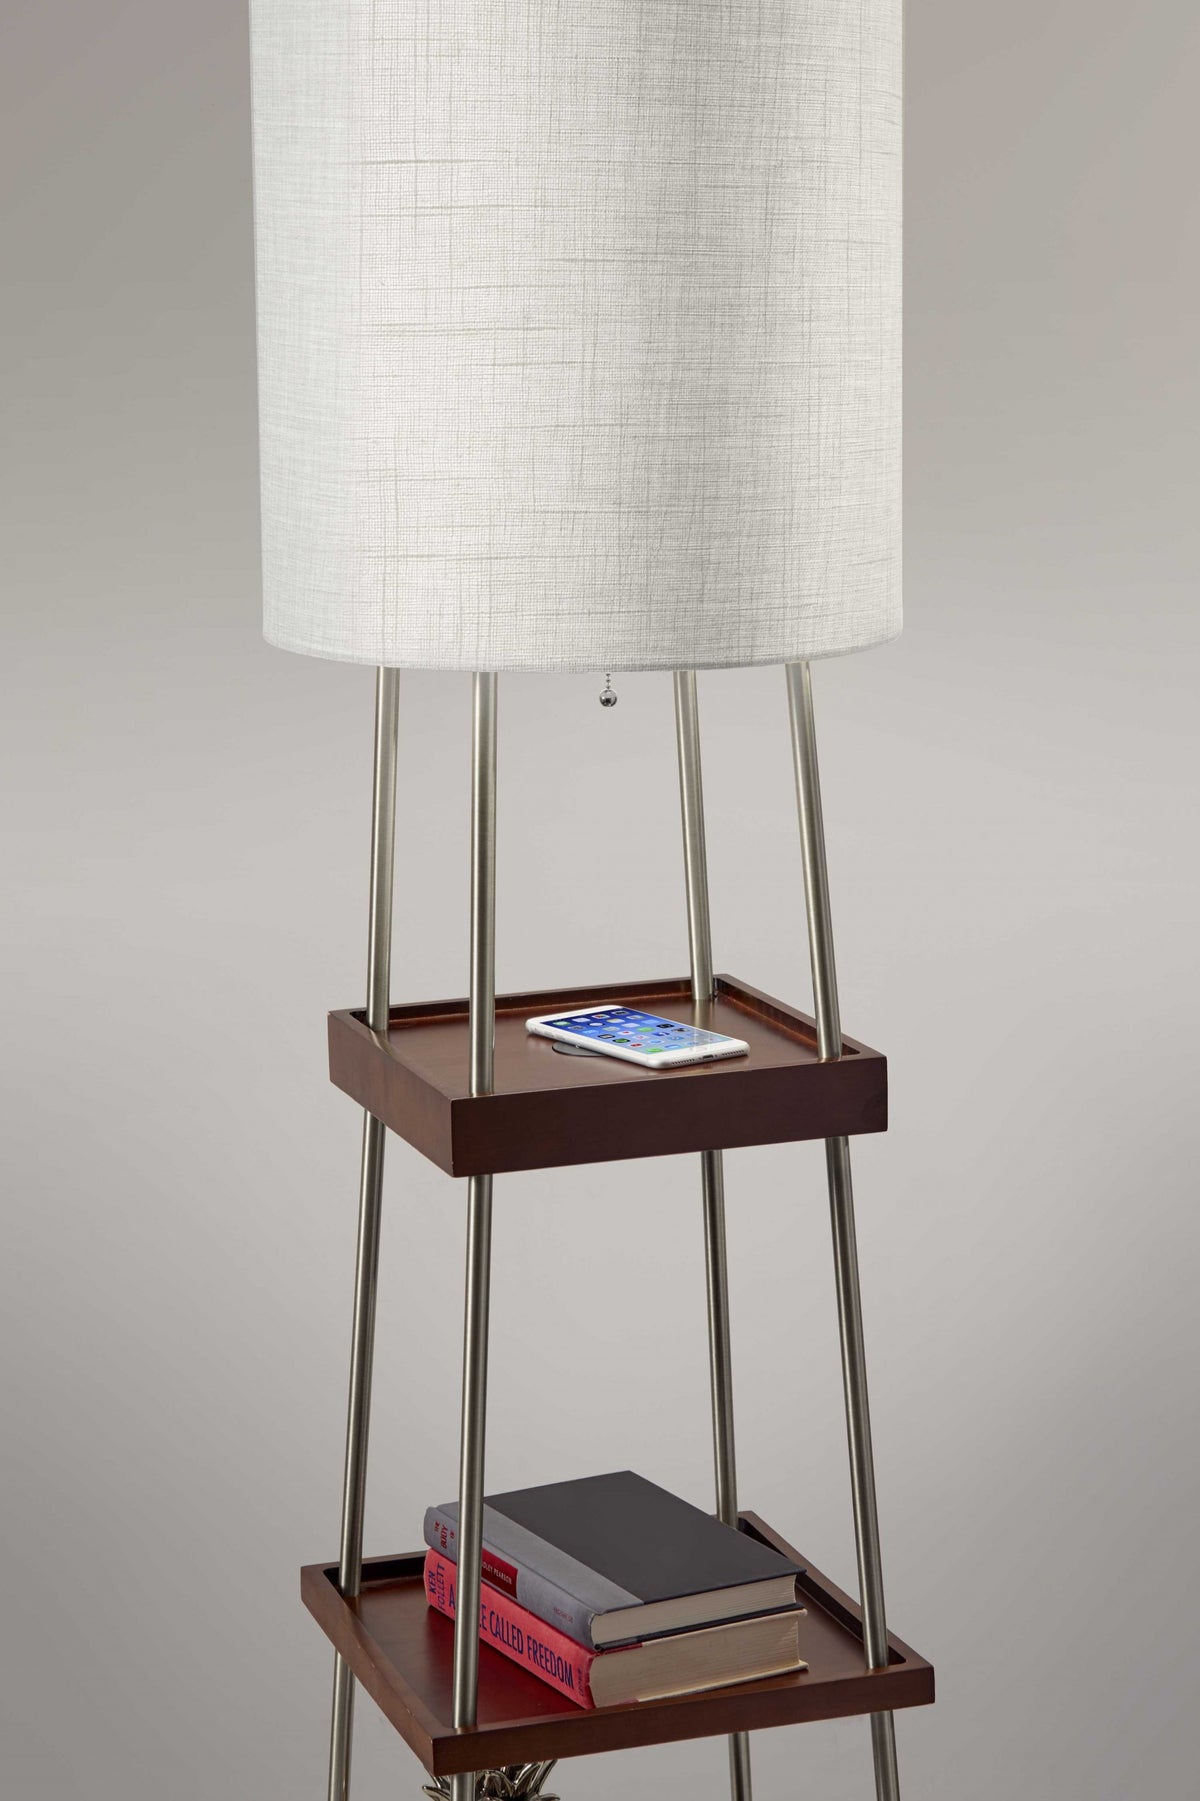 63" Column Floor Lamp With White Drum Shade